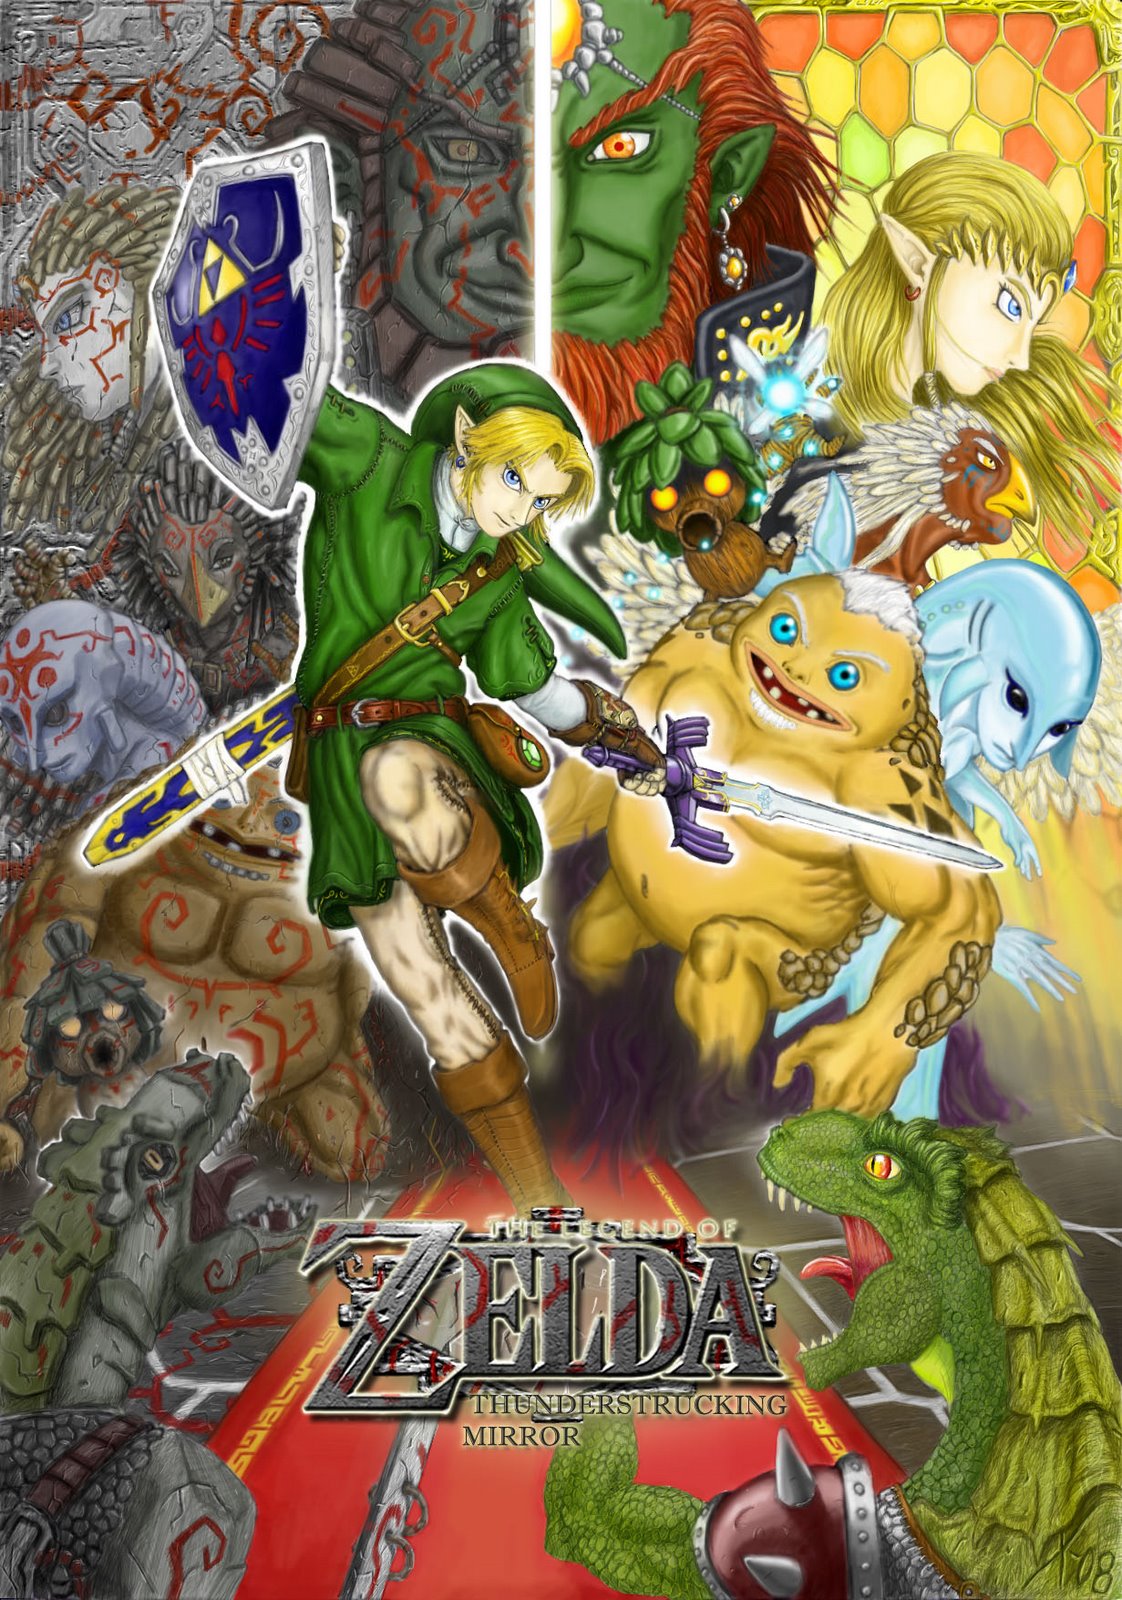 The Legend of Zelda: Thunderstracking Mirror